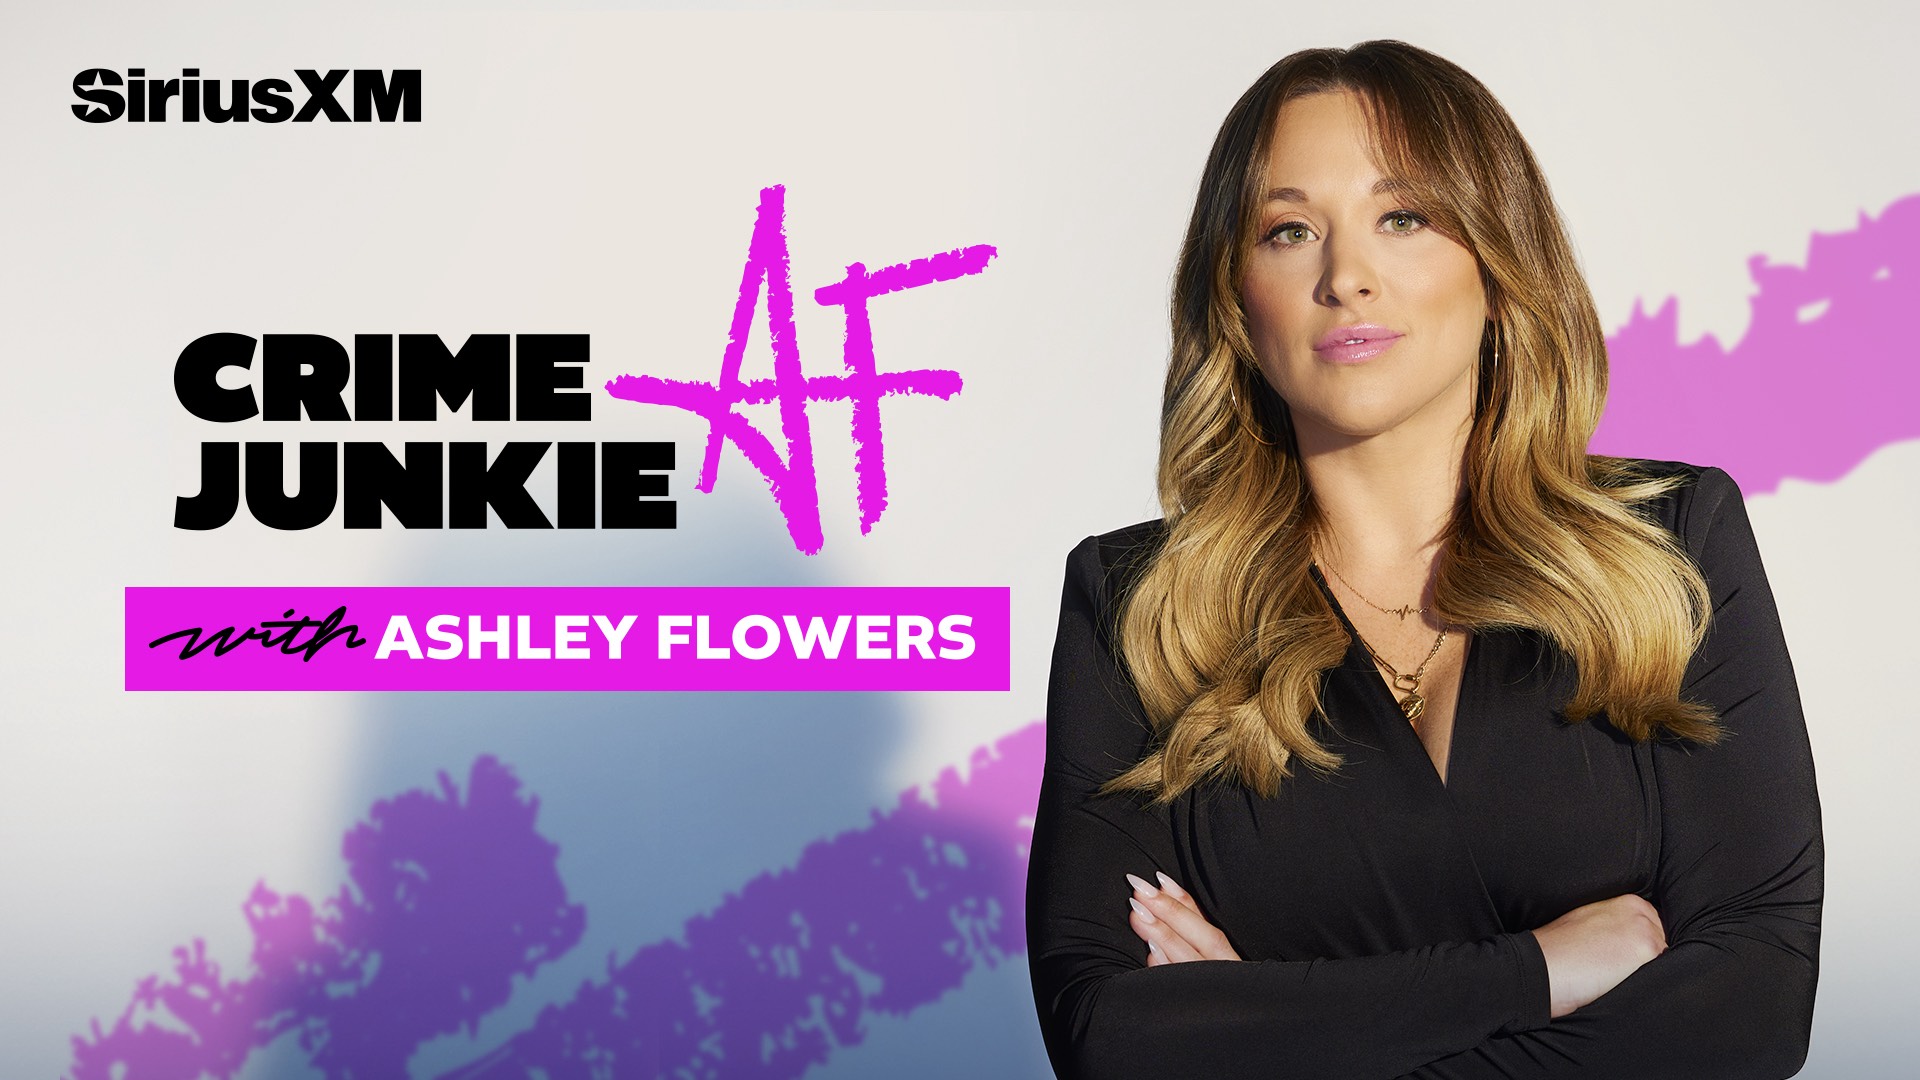 Crime Junkie AF with Ashley Flowers on SiriusXM - 16x9